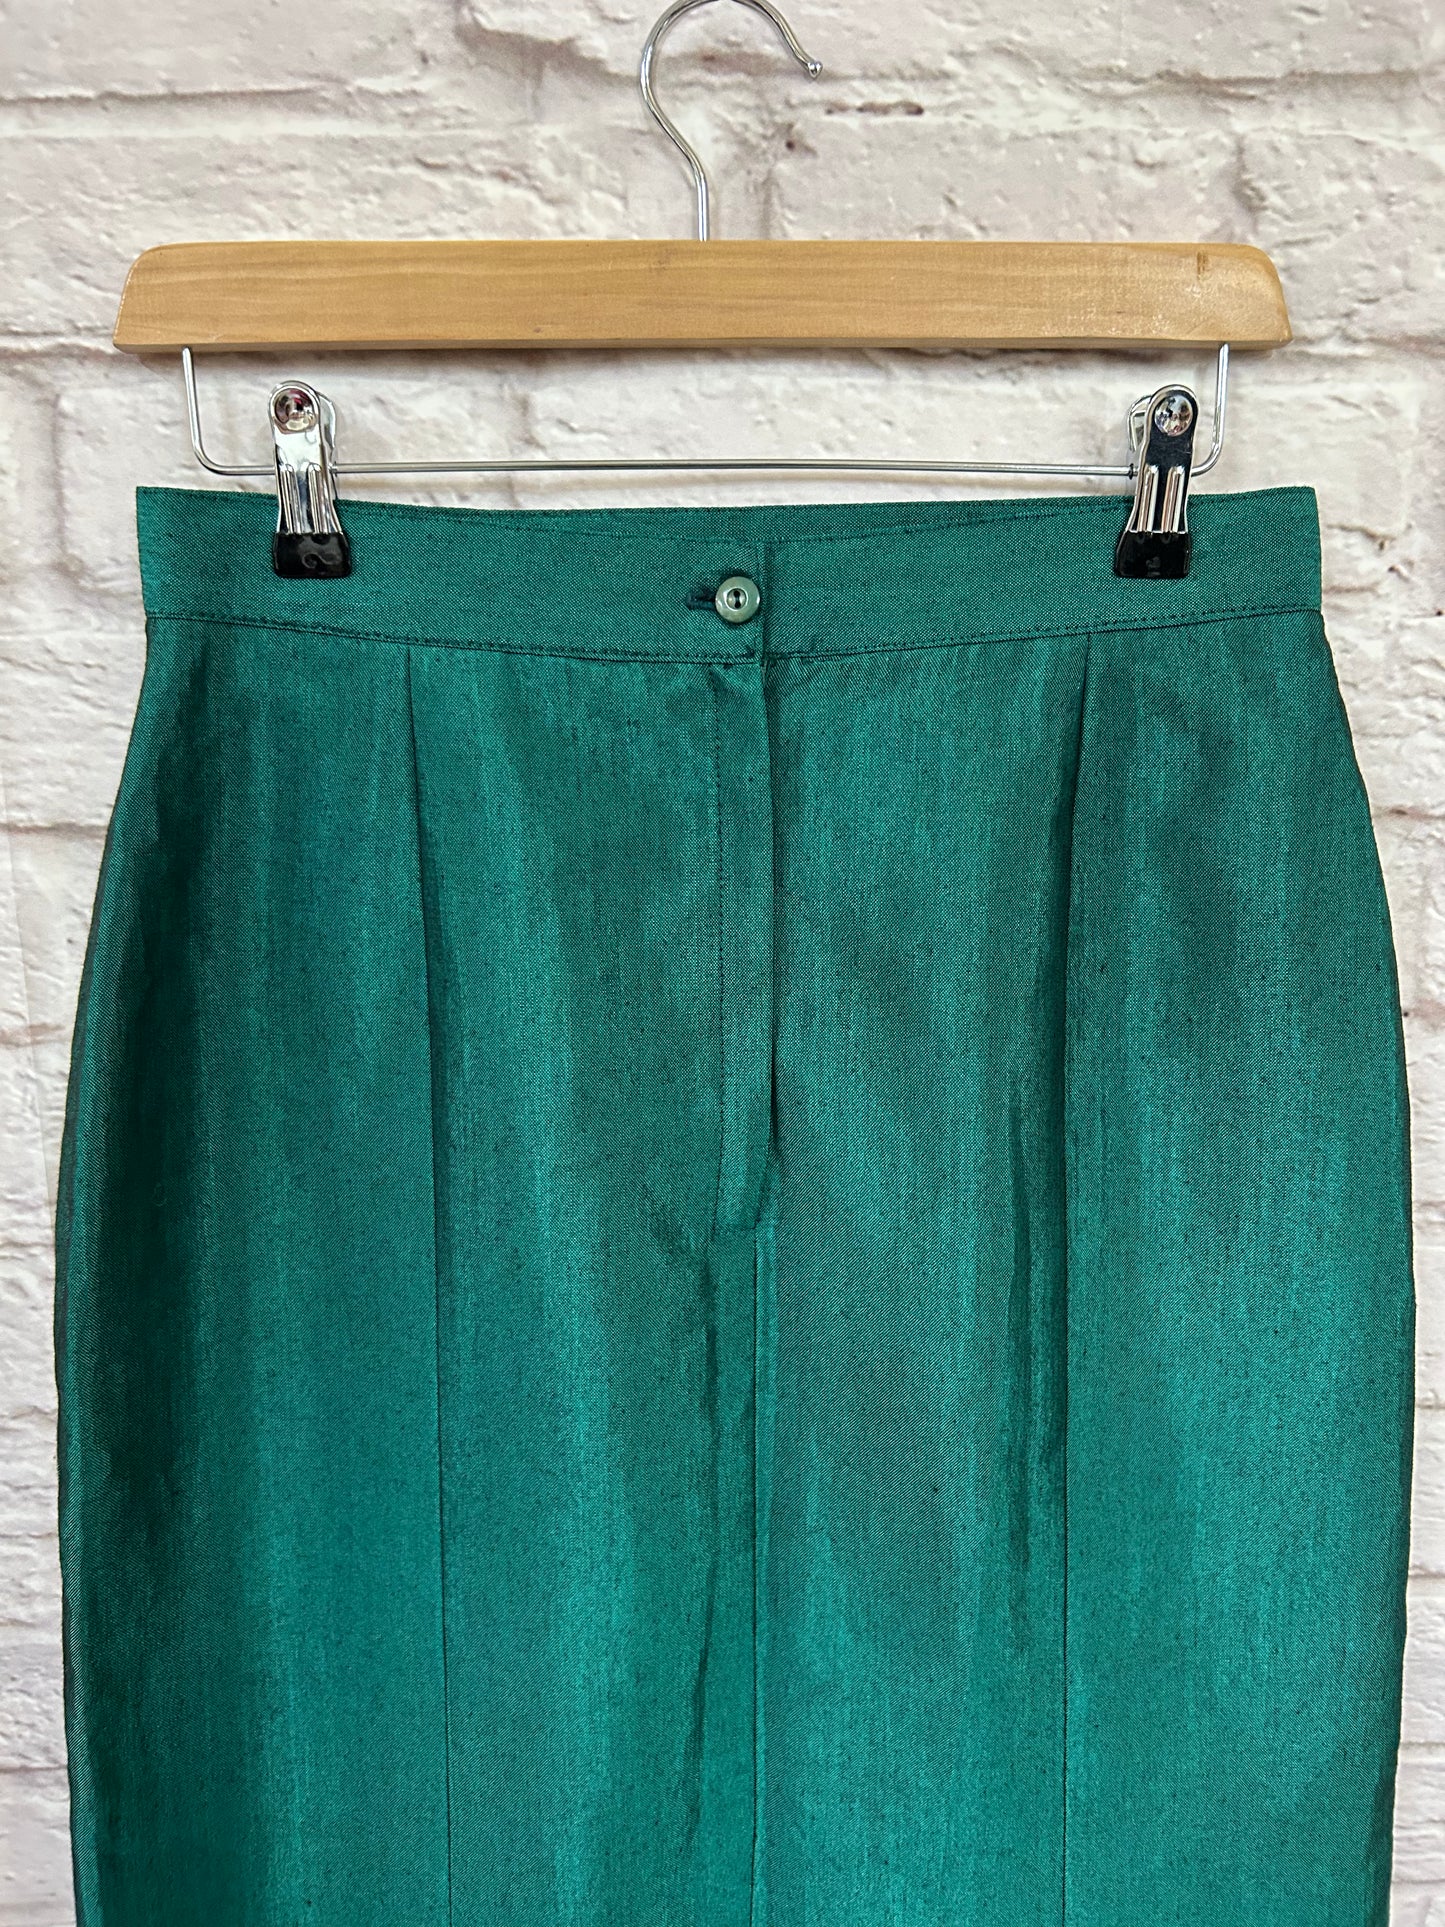 1980s Emerald Green Midi Skirt Size 10